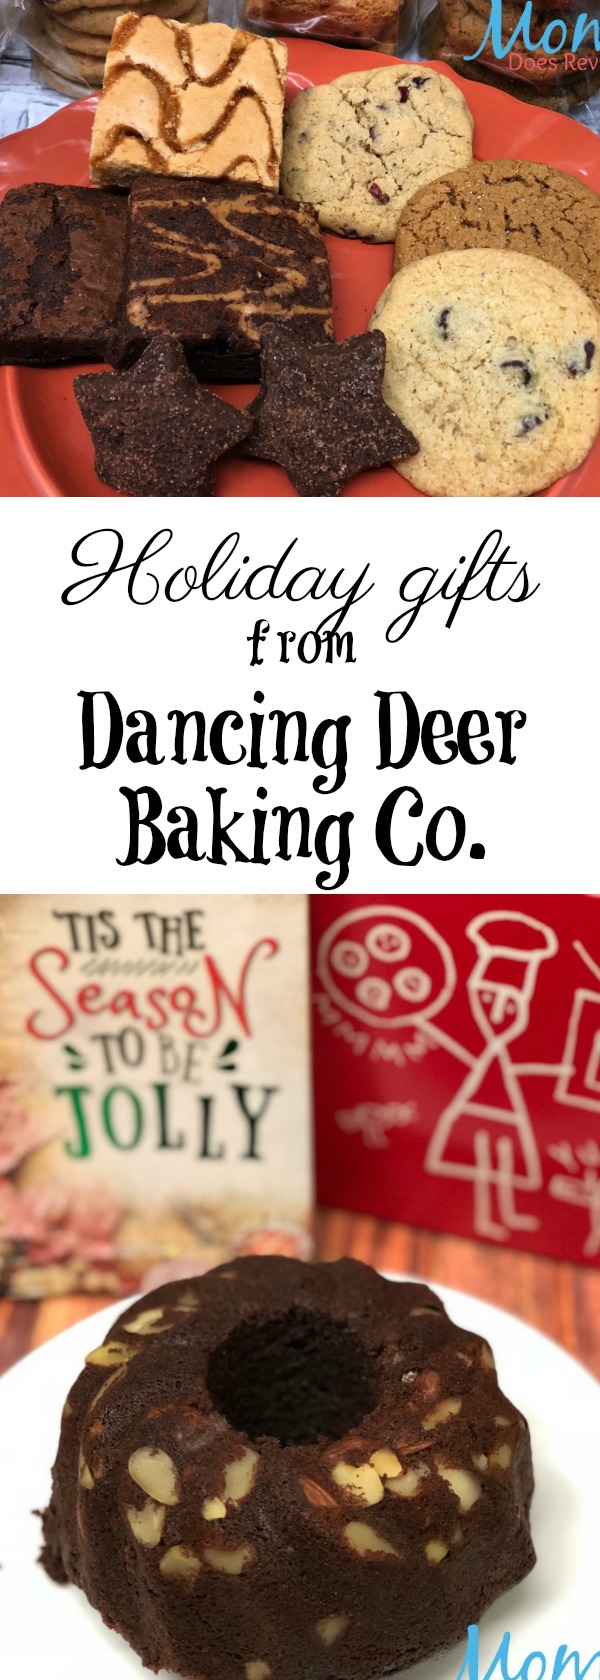 dancing deer baking co holiday gifts